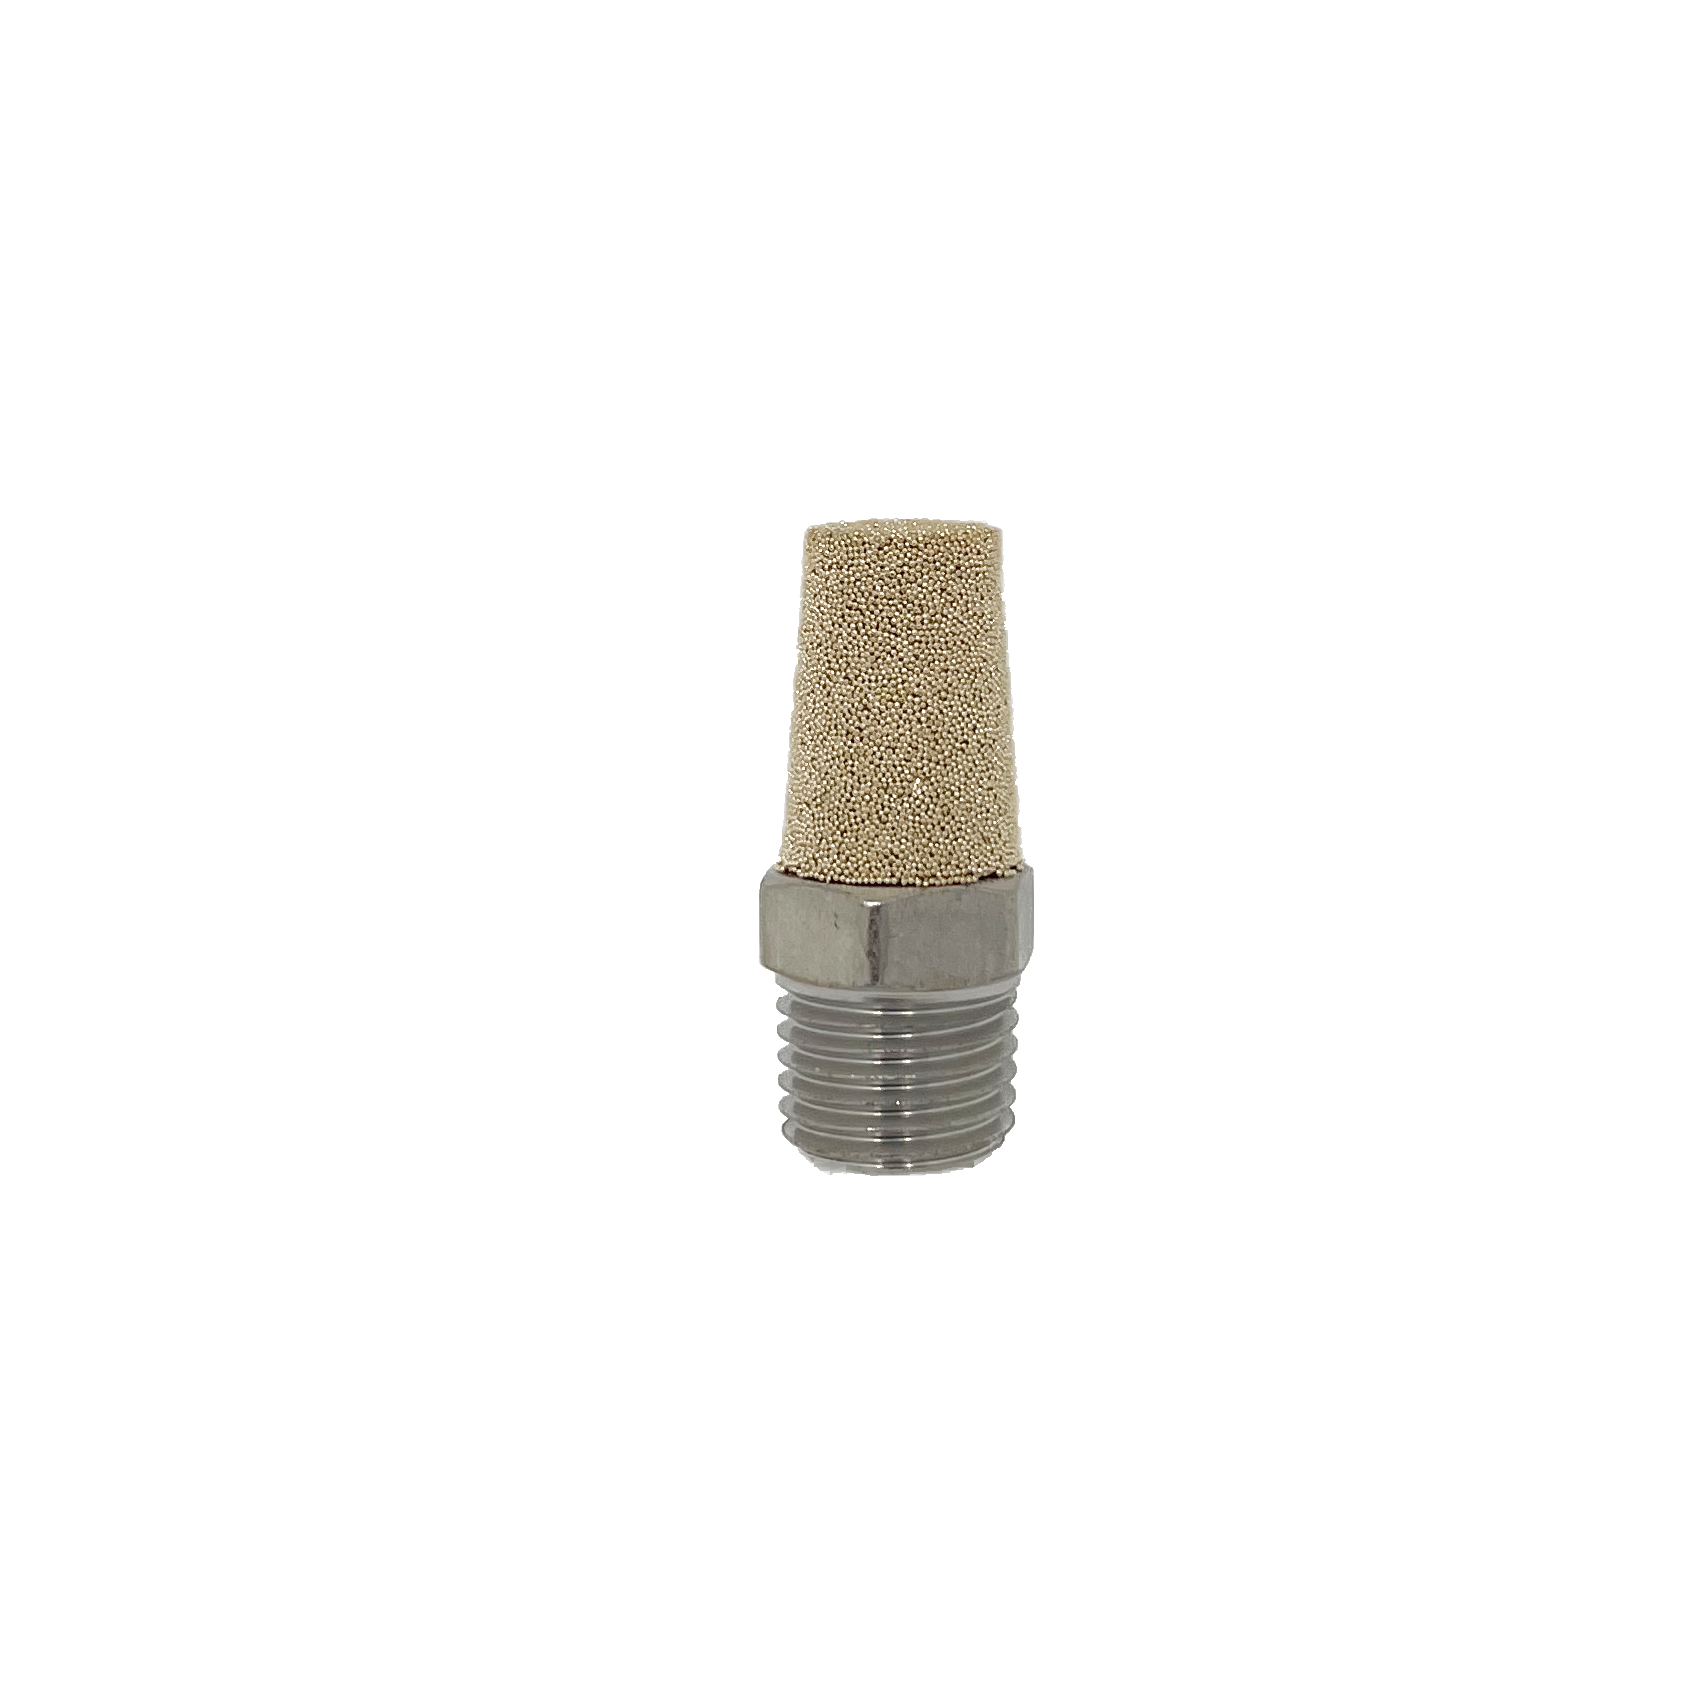 MS002A : Norgren Quietaire Series, sintered bronze muffler, 1/4 NPT male thread